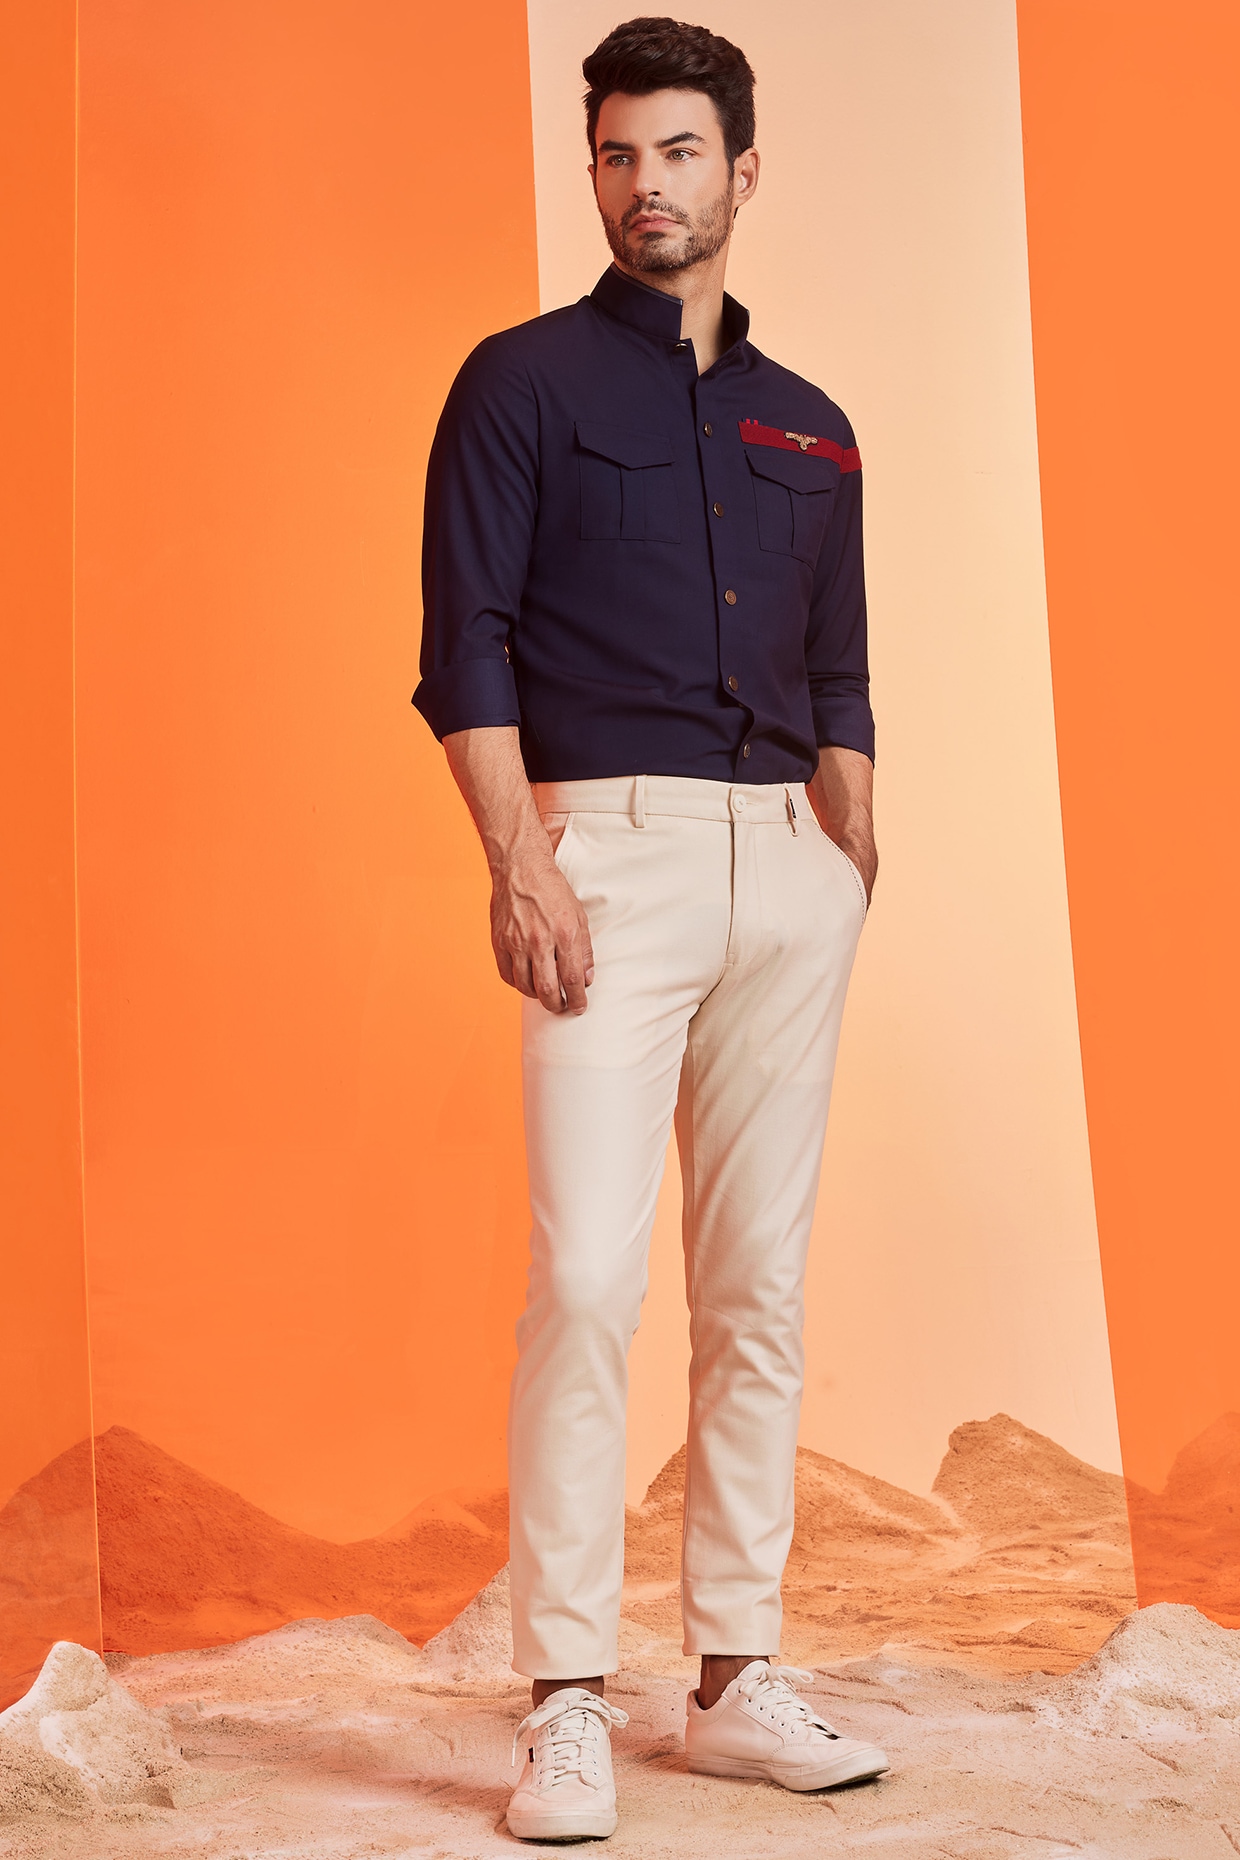 Linen Half Sleeve Orange Plain Shirt, Formal Wear at Rs 280 in Jaipur